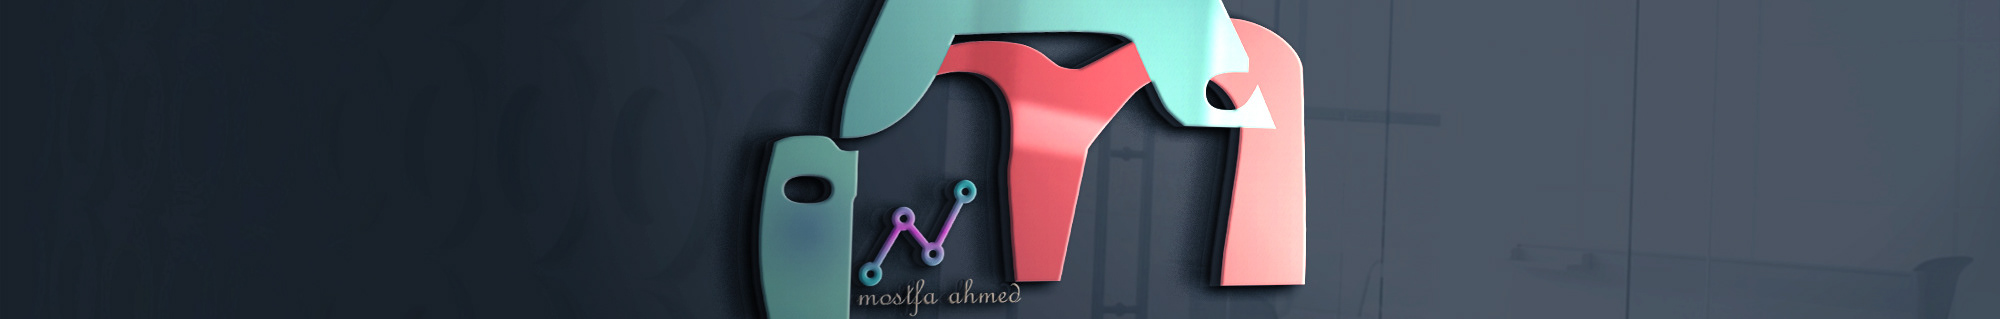 Mostfa AhMed's profile banner